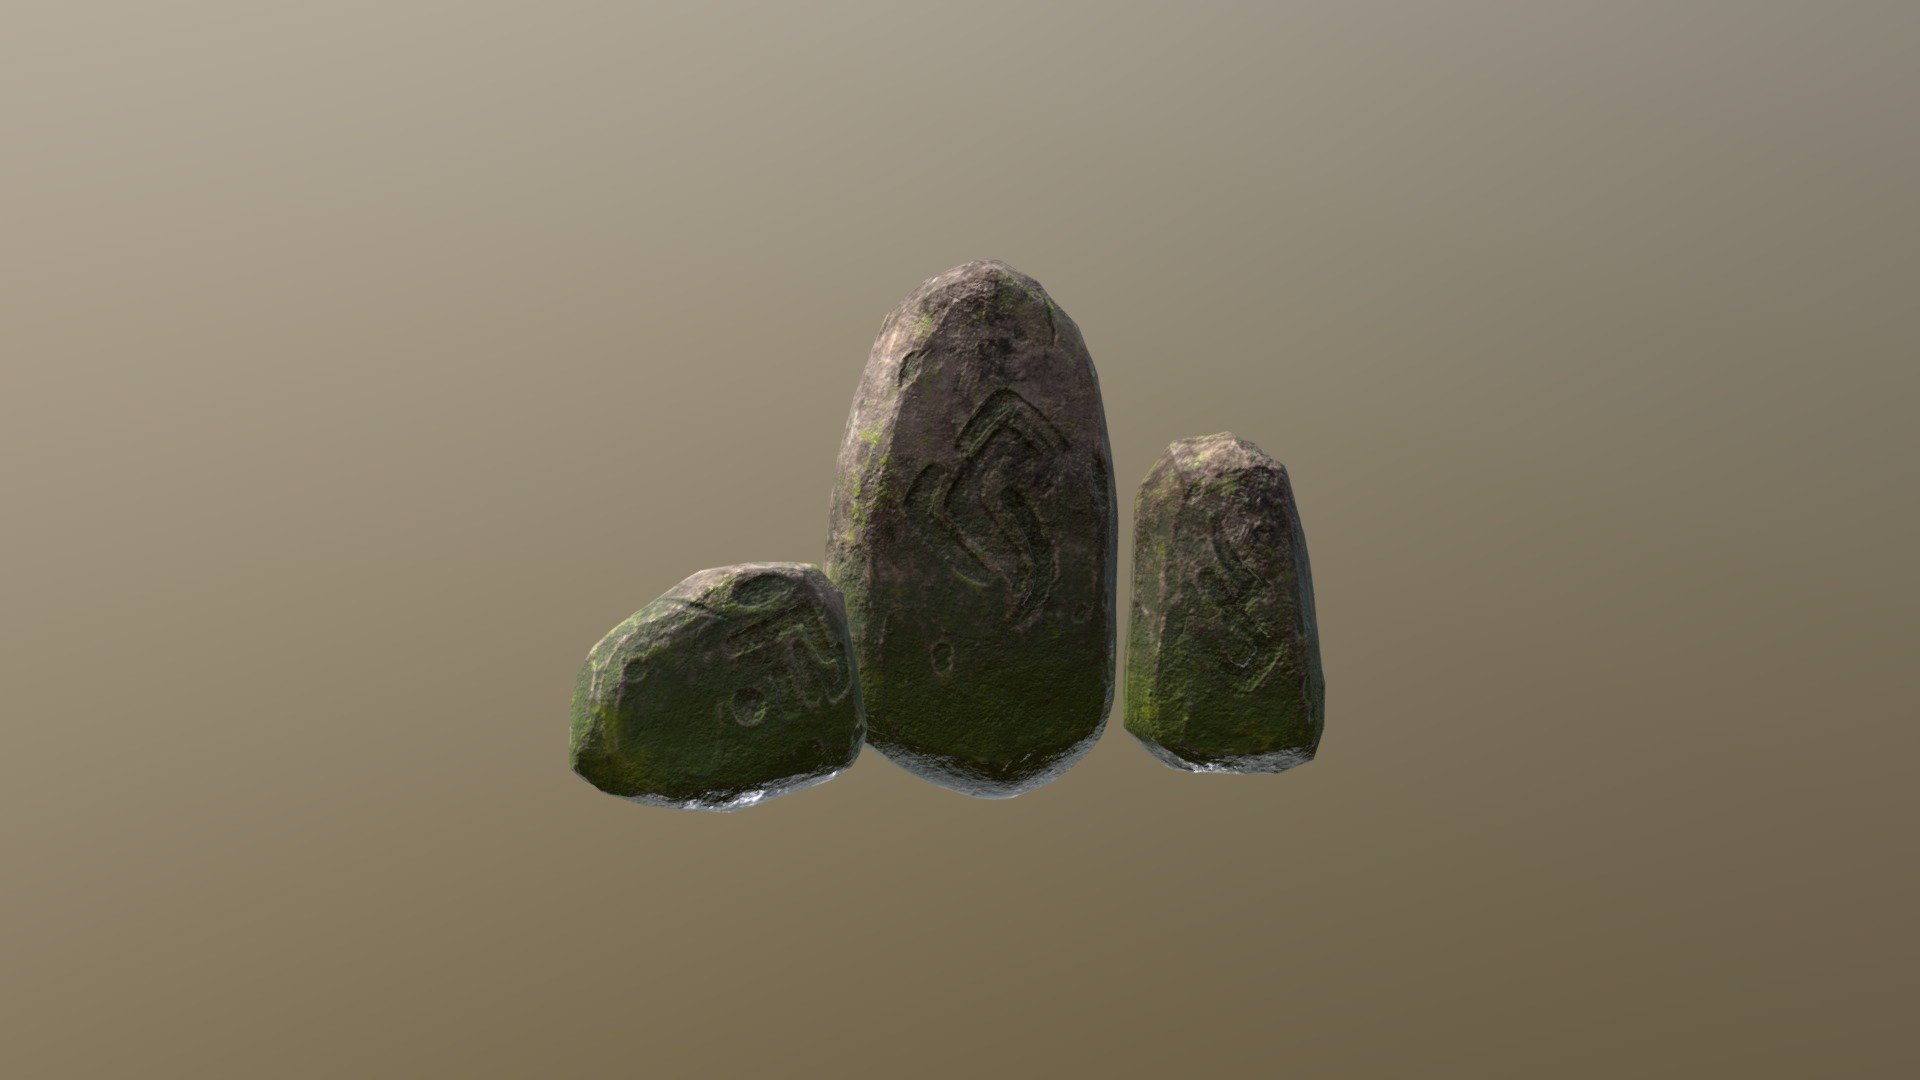 Mossy Rocks with Runes